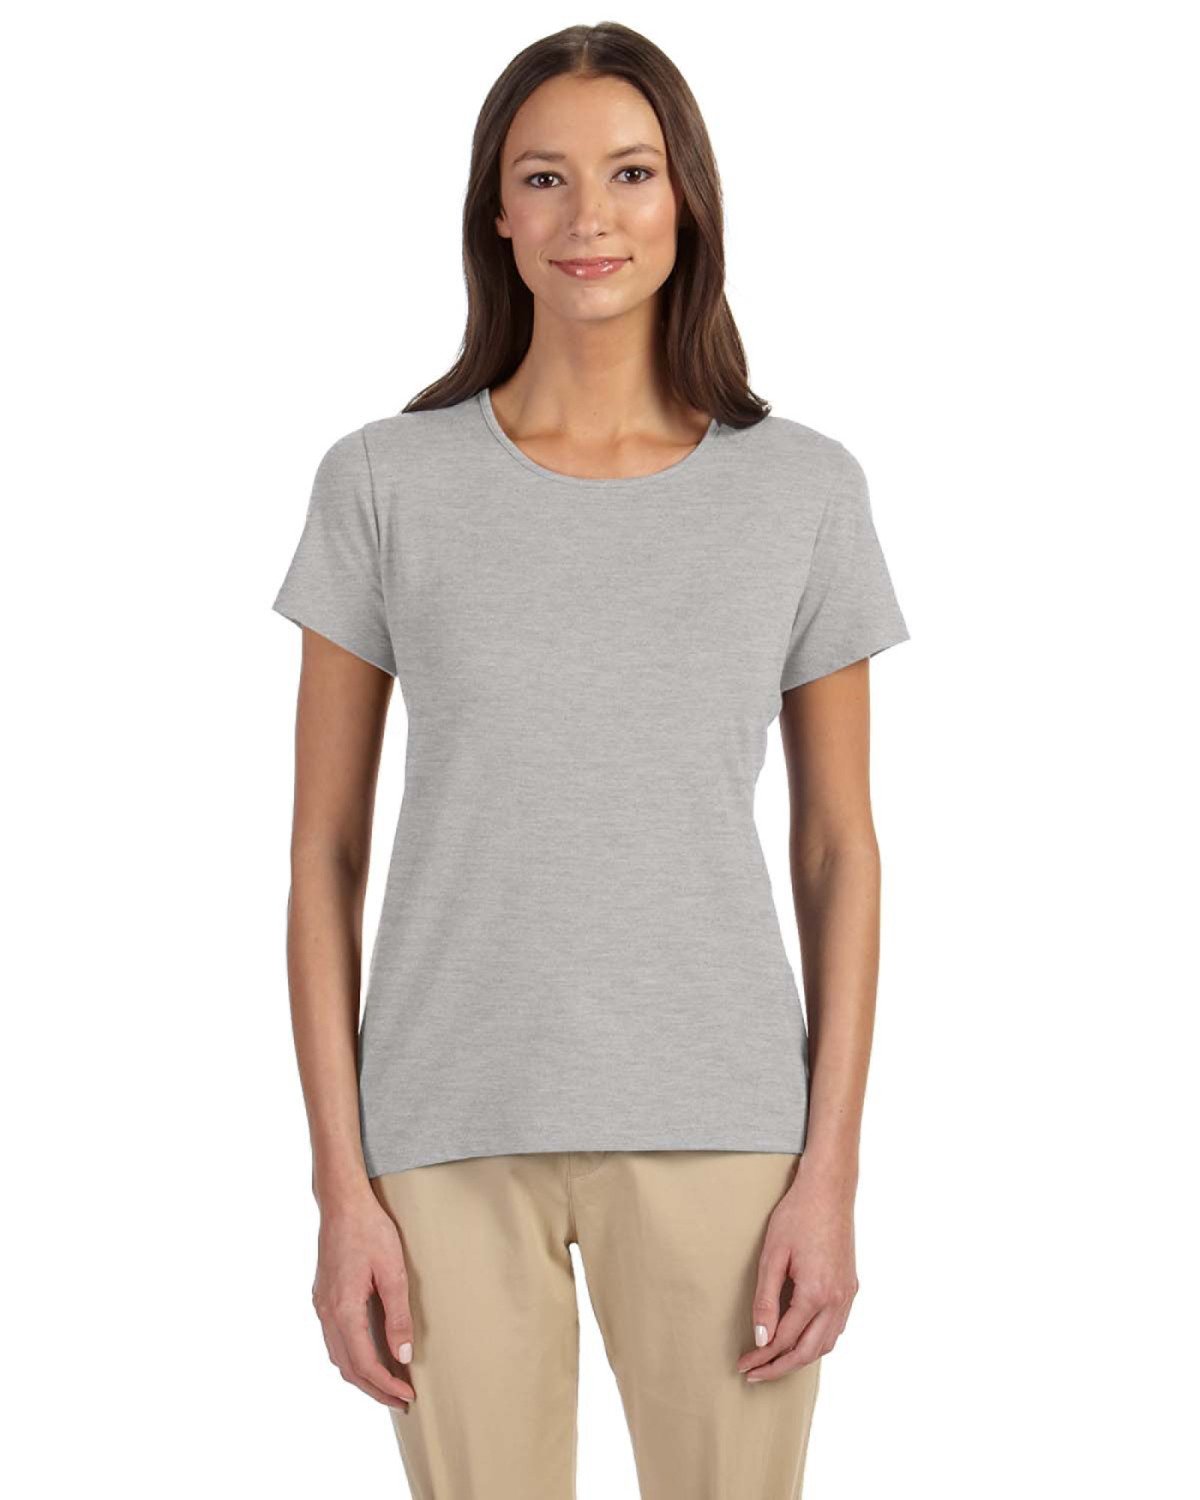 Effortless Sophistication: Devon & Jones Ladies' Perfect Fitâ„¢ Shell T-Shirt